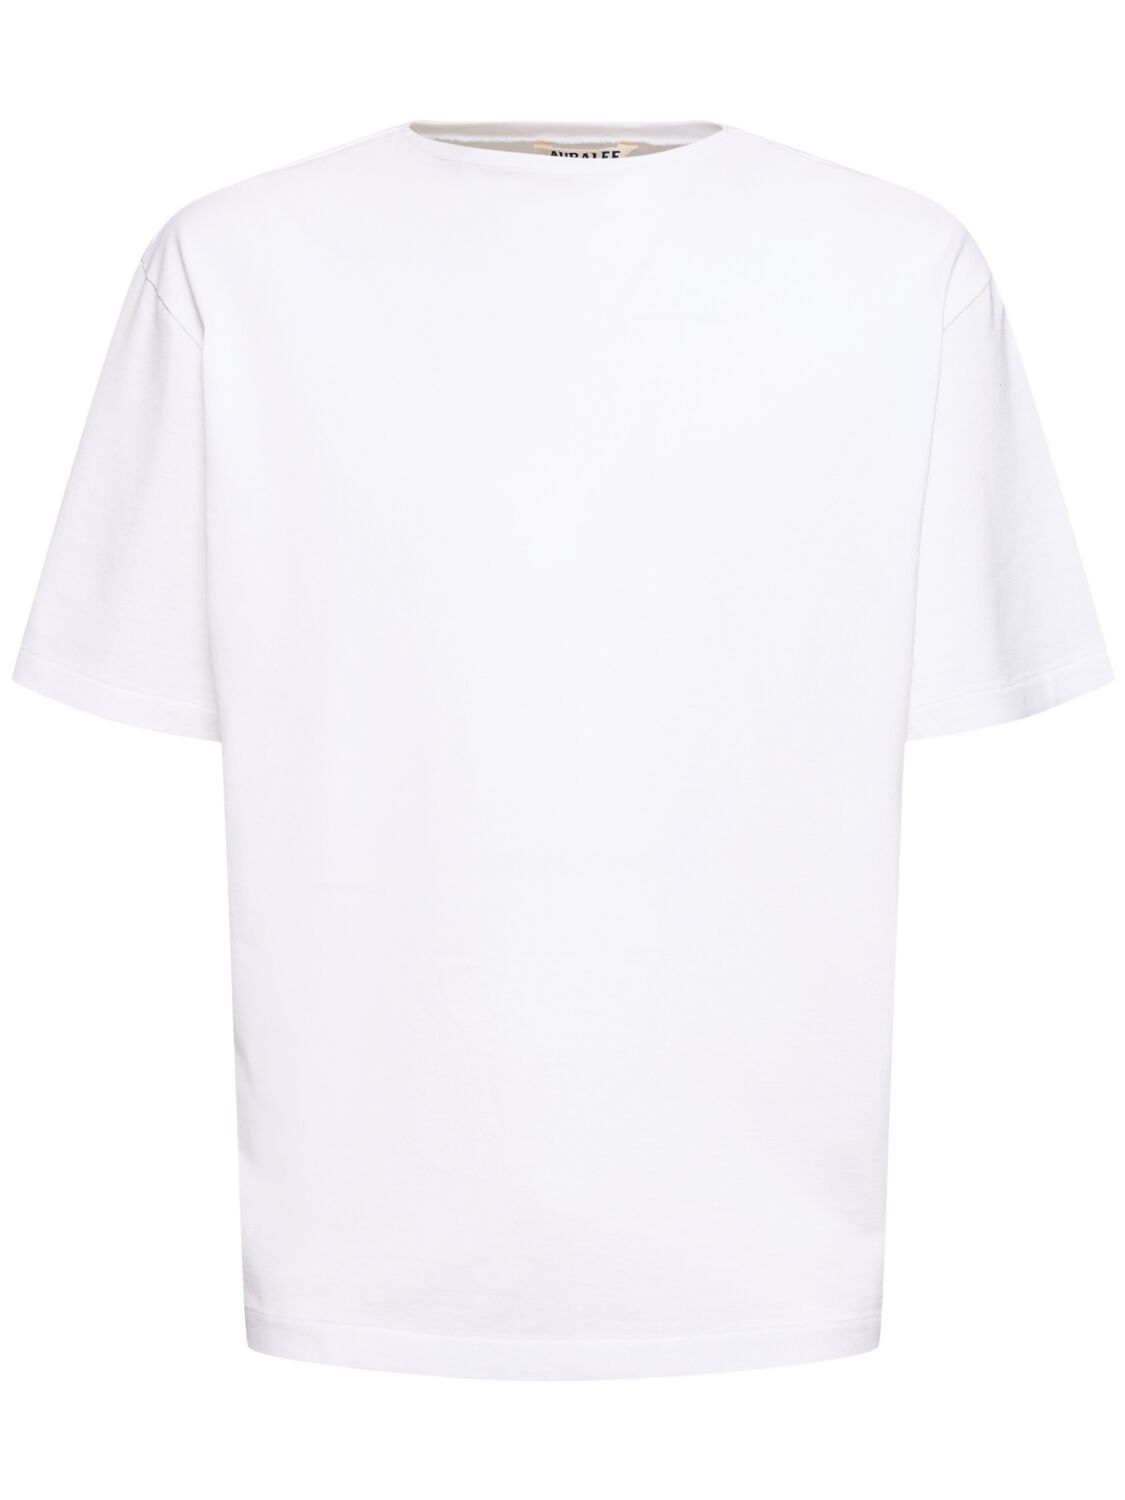 Image of Cotton Knit T-shirt